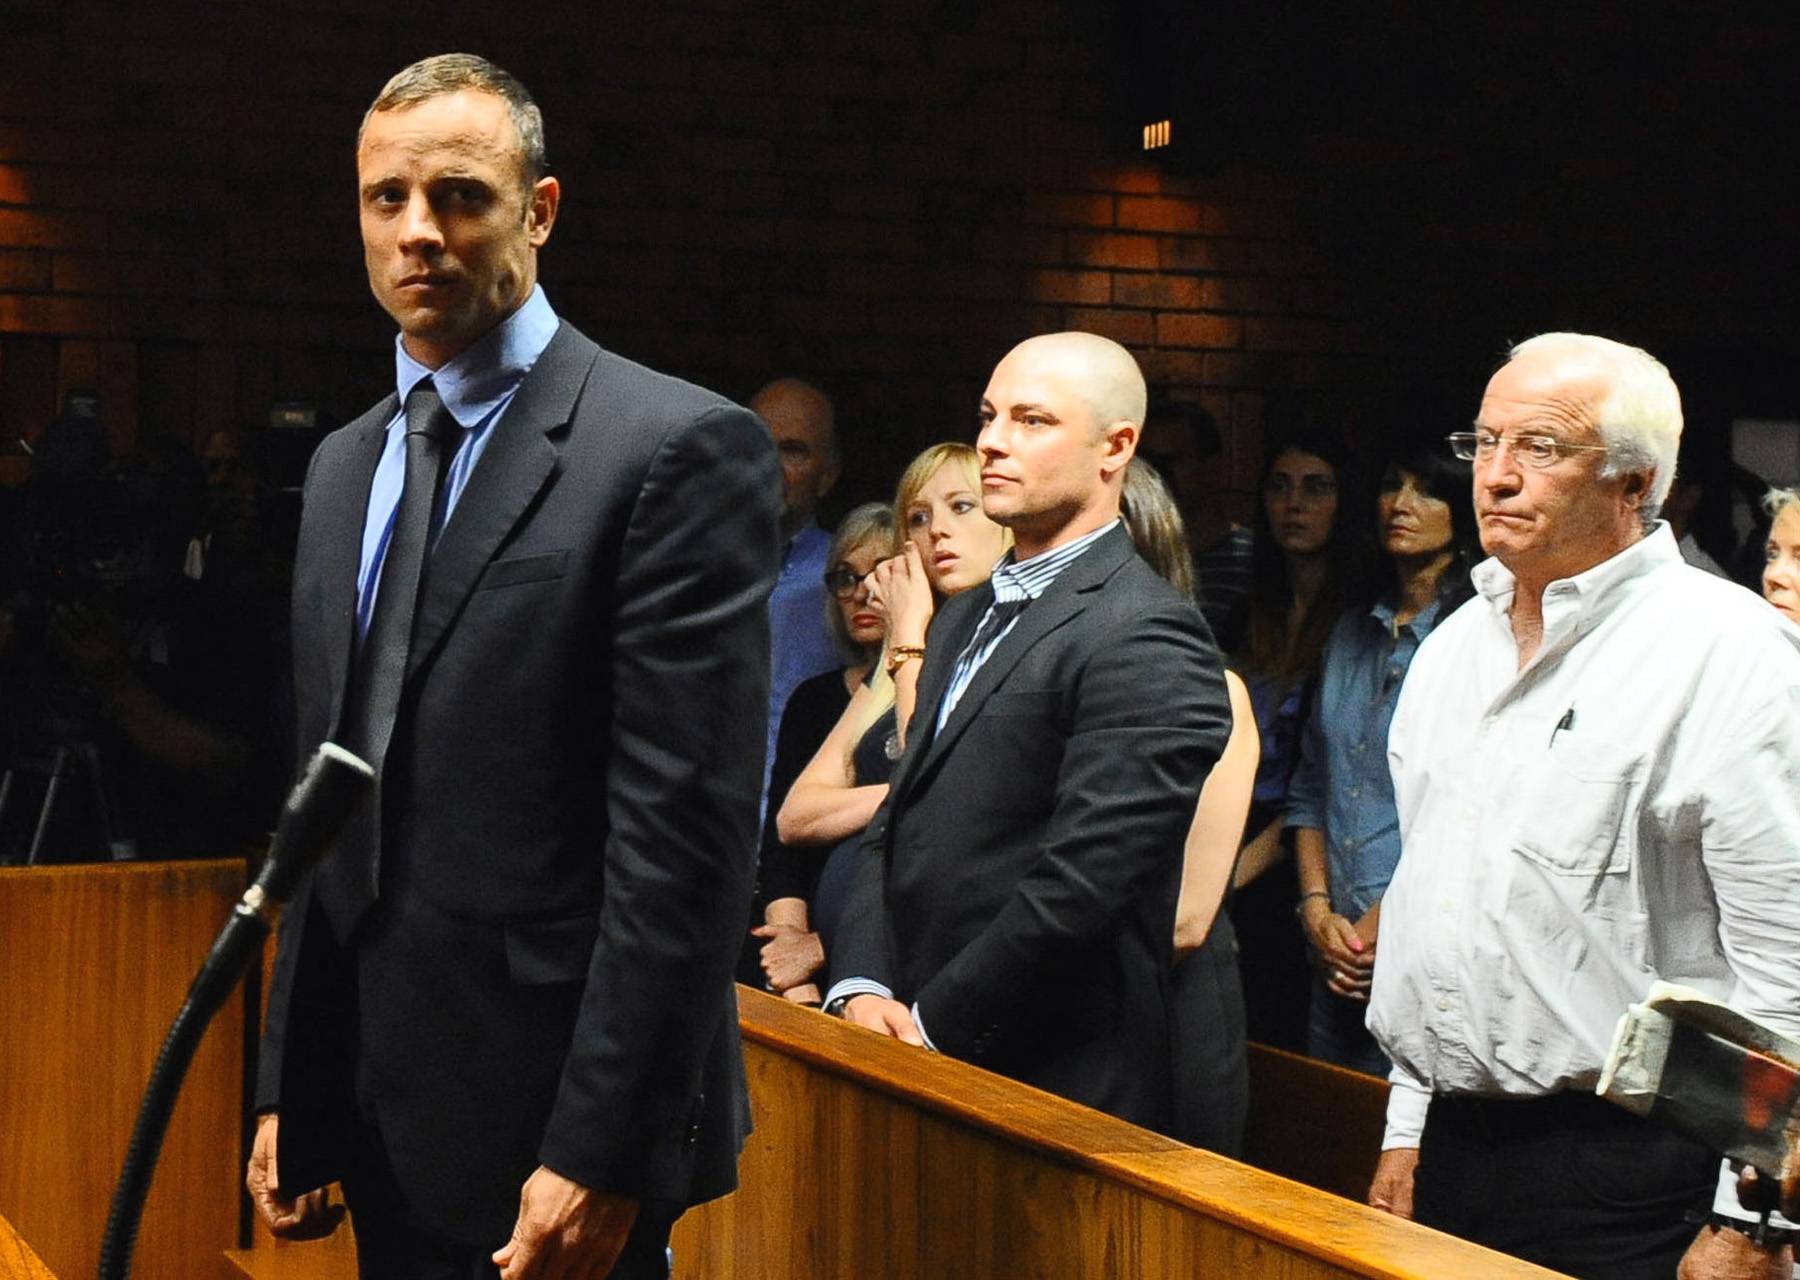 Track Star Oscar Pistorius: “I Had No Intention to Kill My Girlfriend”